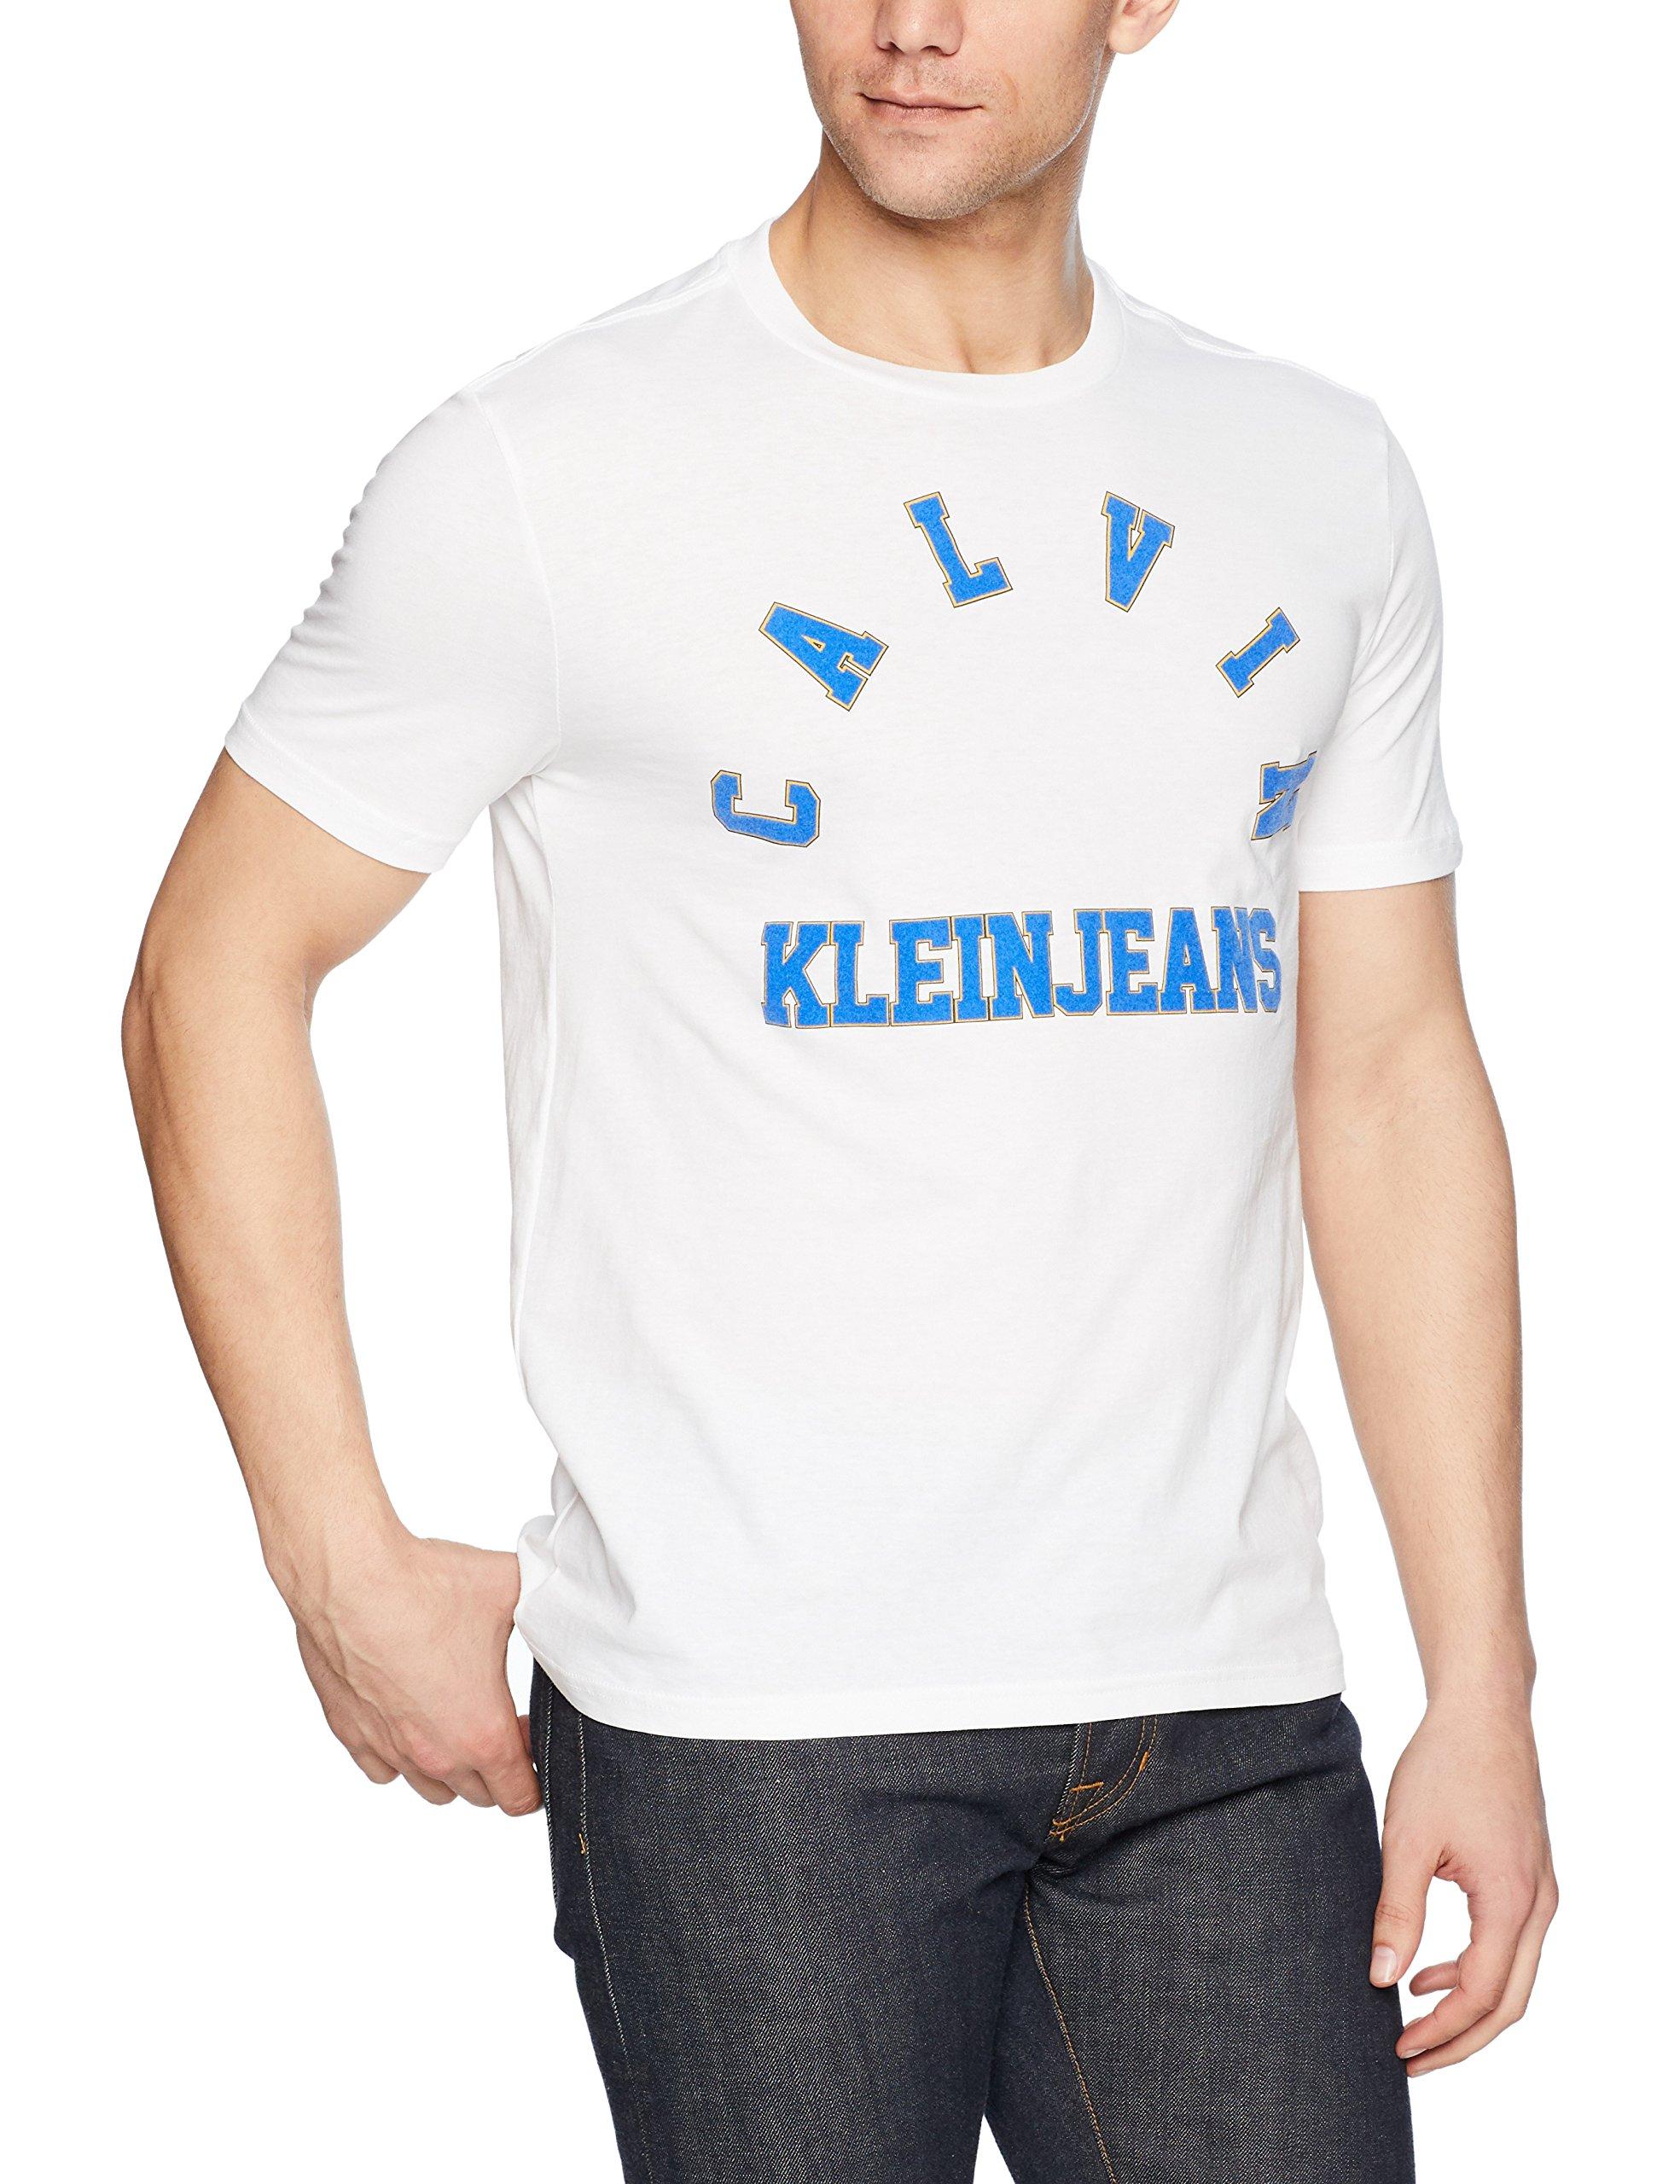 Genuine MINI Signet Print Wing Logo Mens Short Sleeve T-Shirt Top White// Aqua